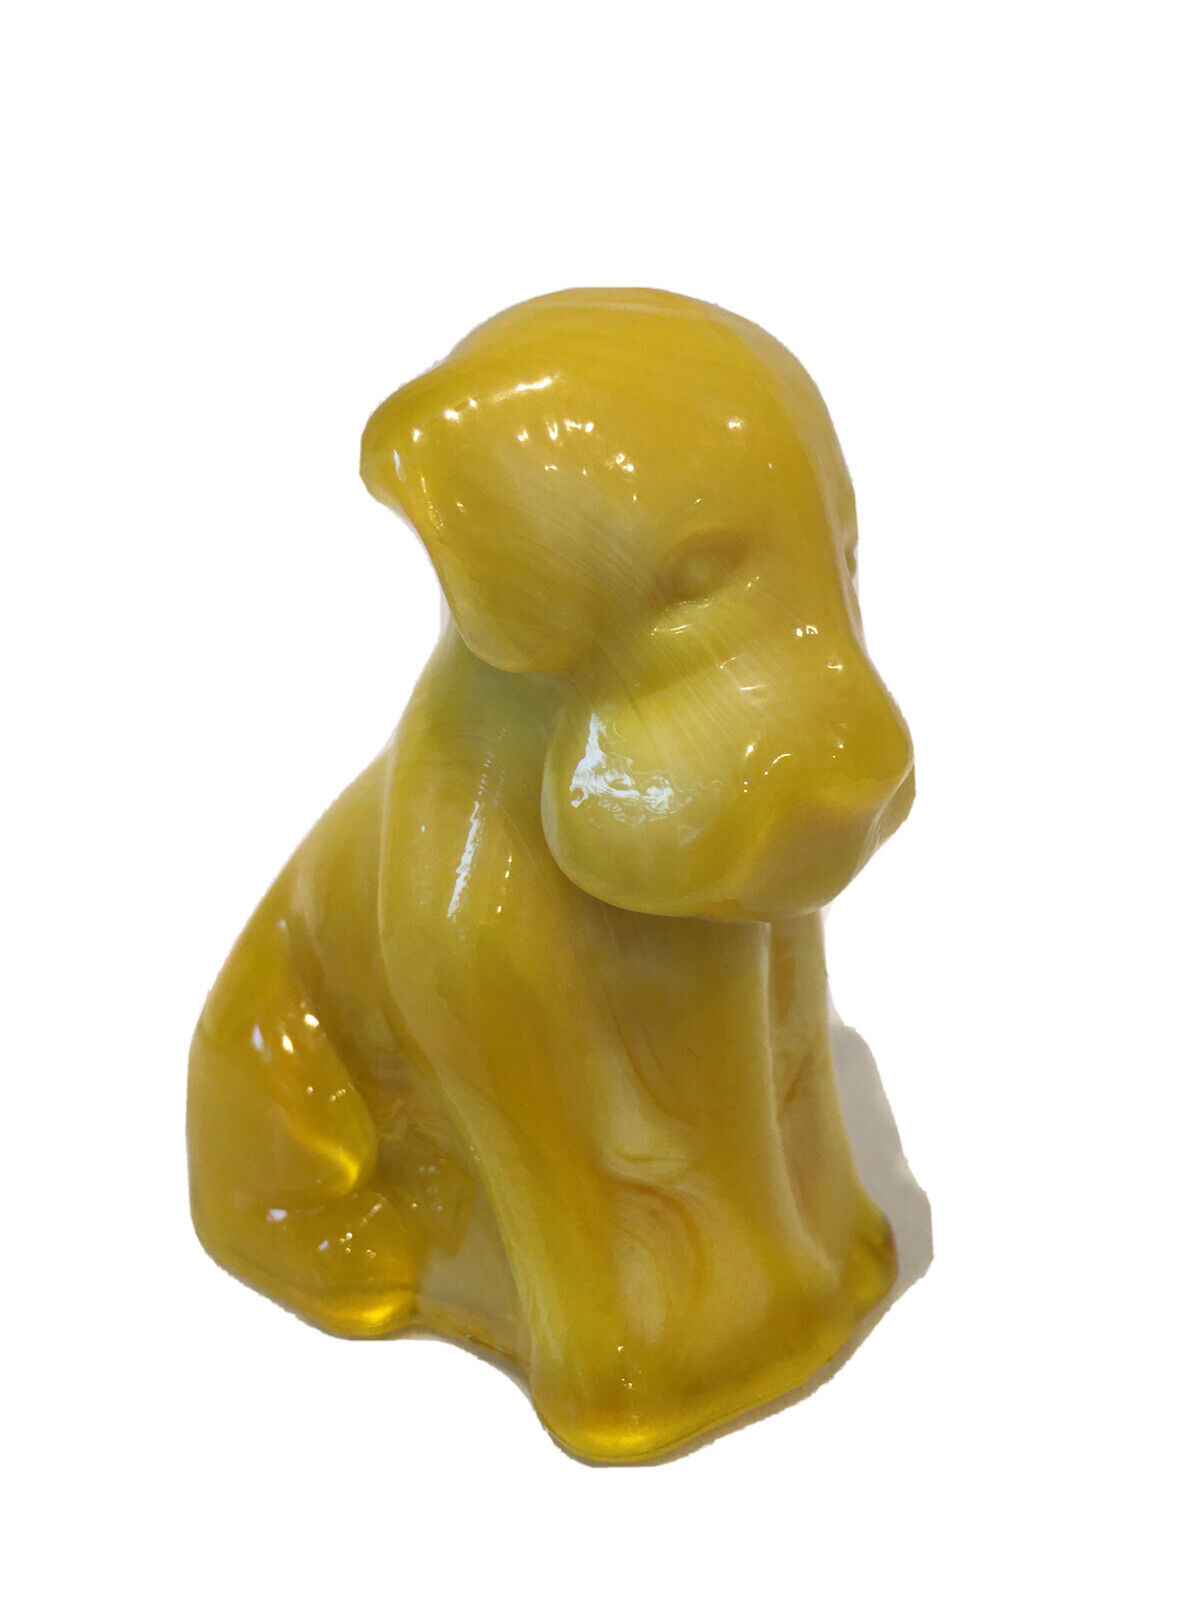 Boyd’s Art Glass’s VTG Dog Figurine, Pooche The Dog,#9 Butterscotch Slag UV+, HS